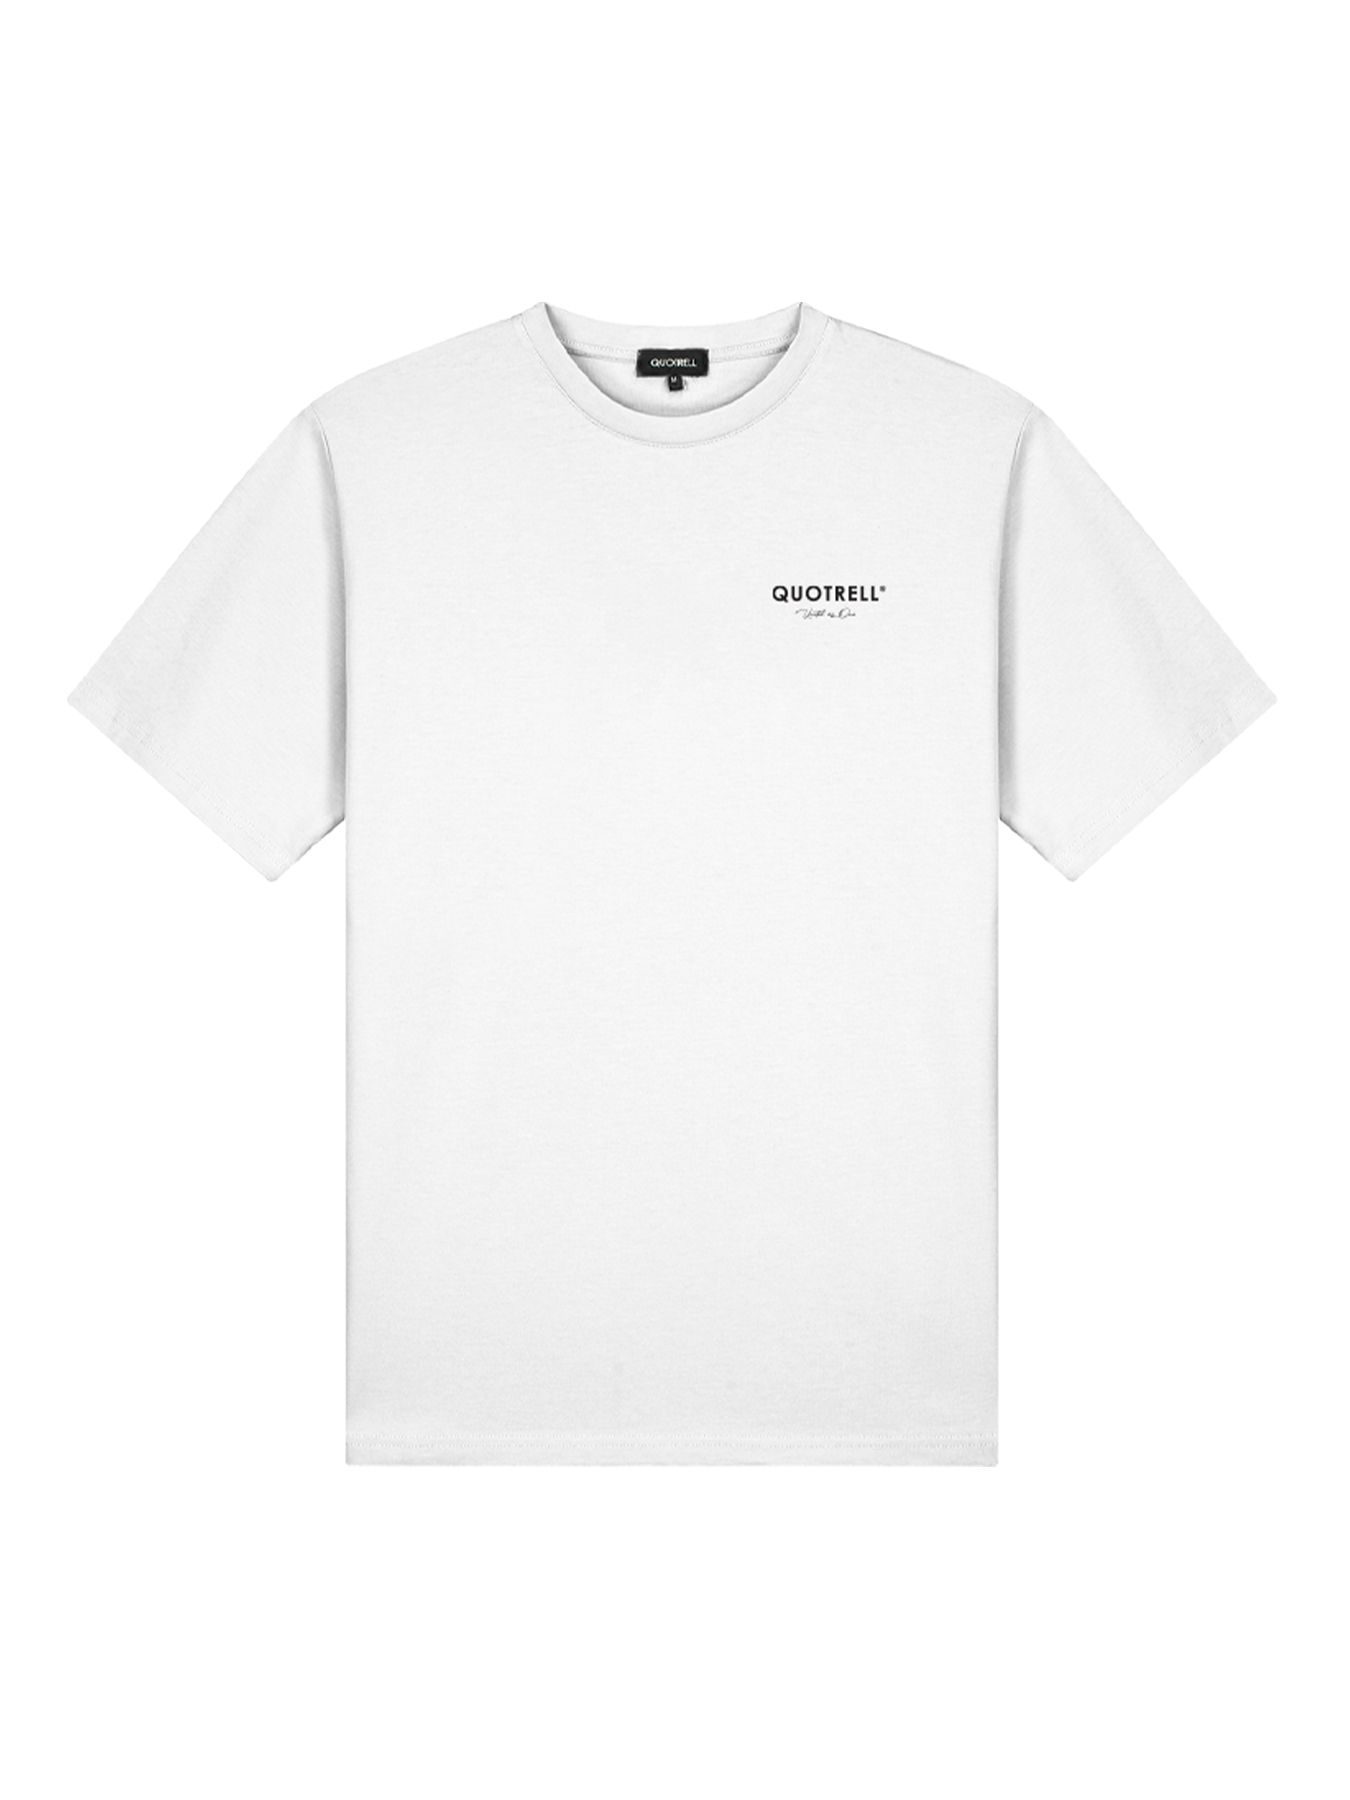 Quotrell Jaipur t-shirt White/black 00104045-102